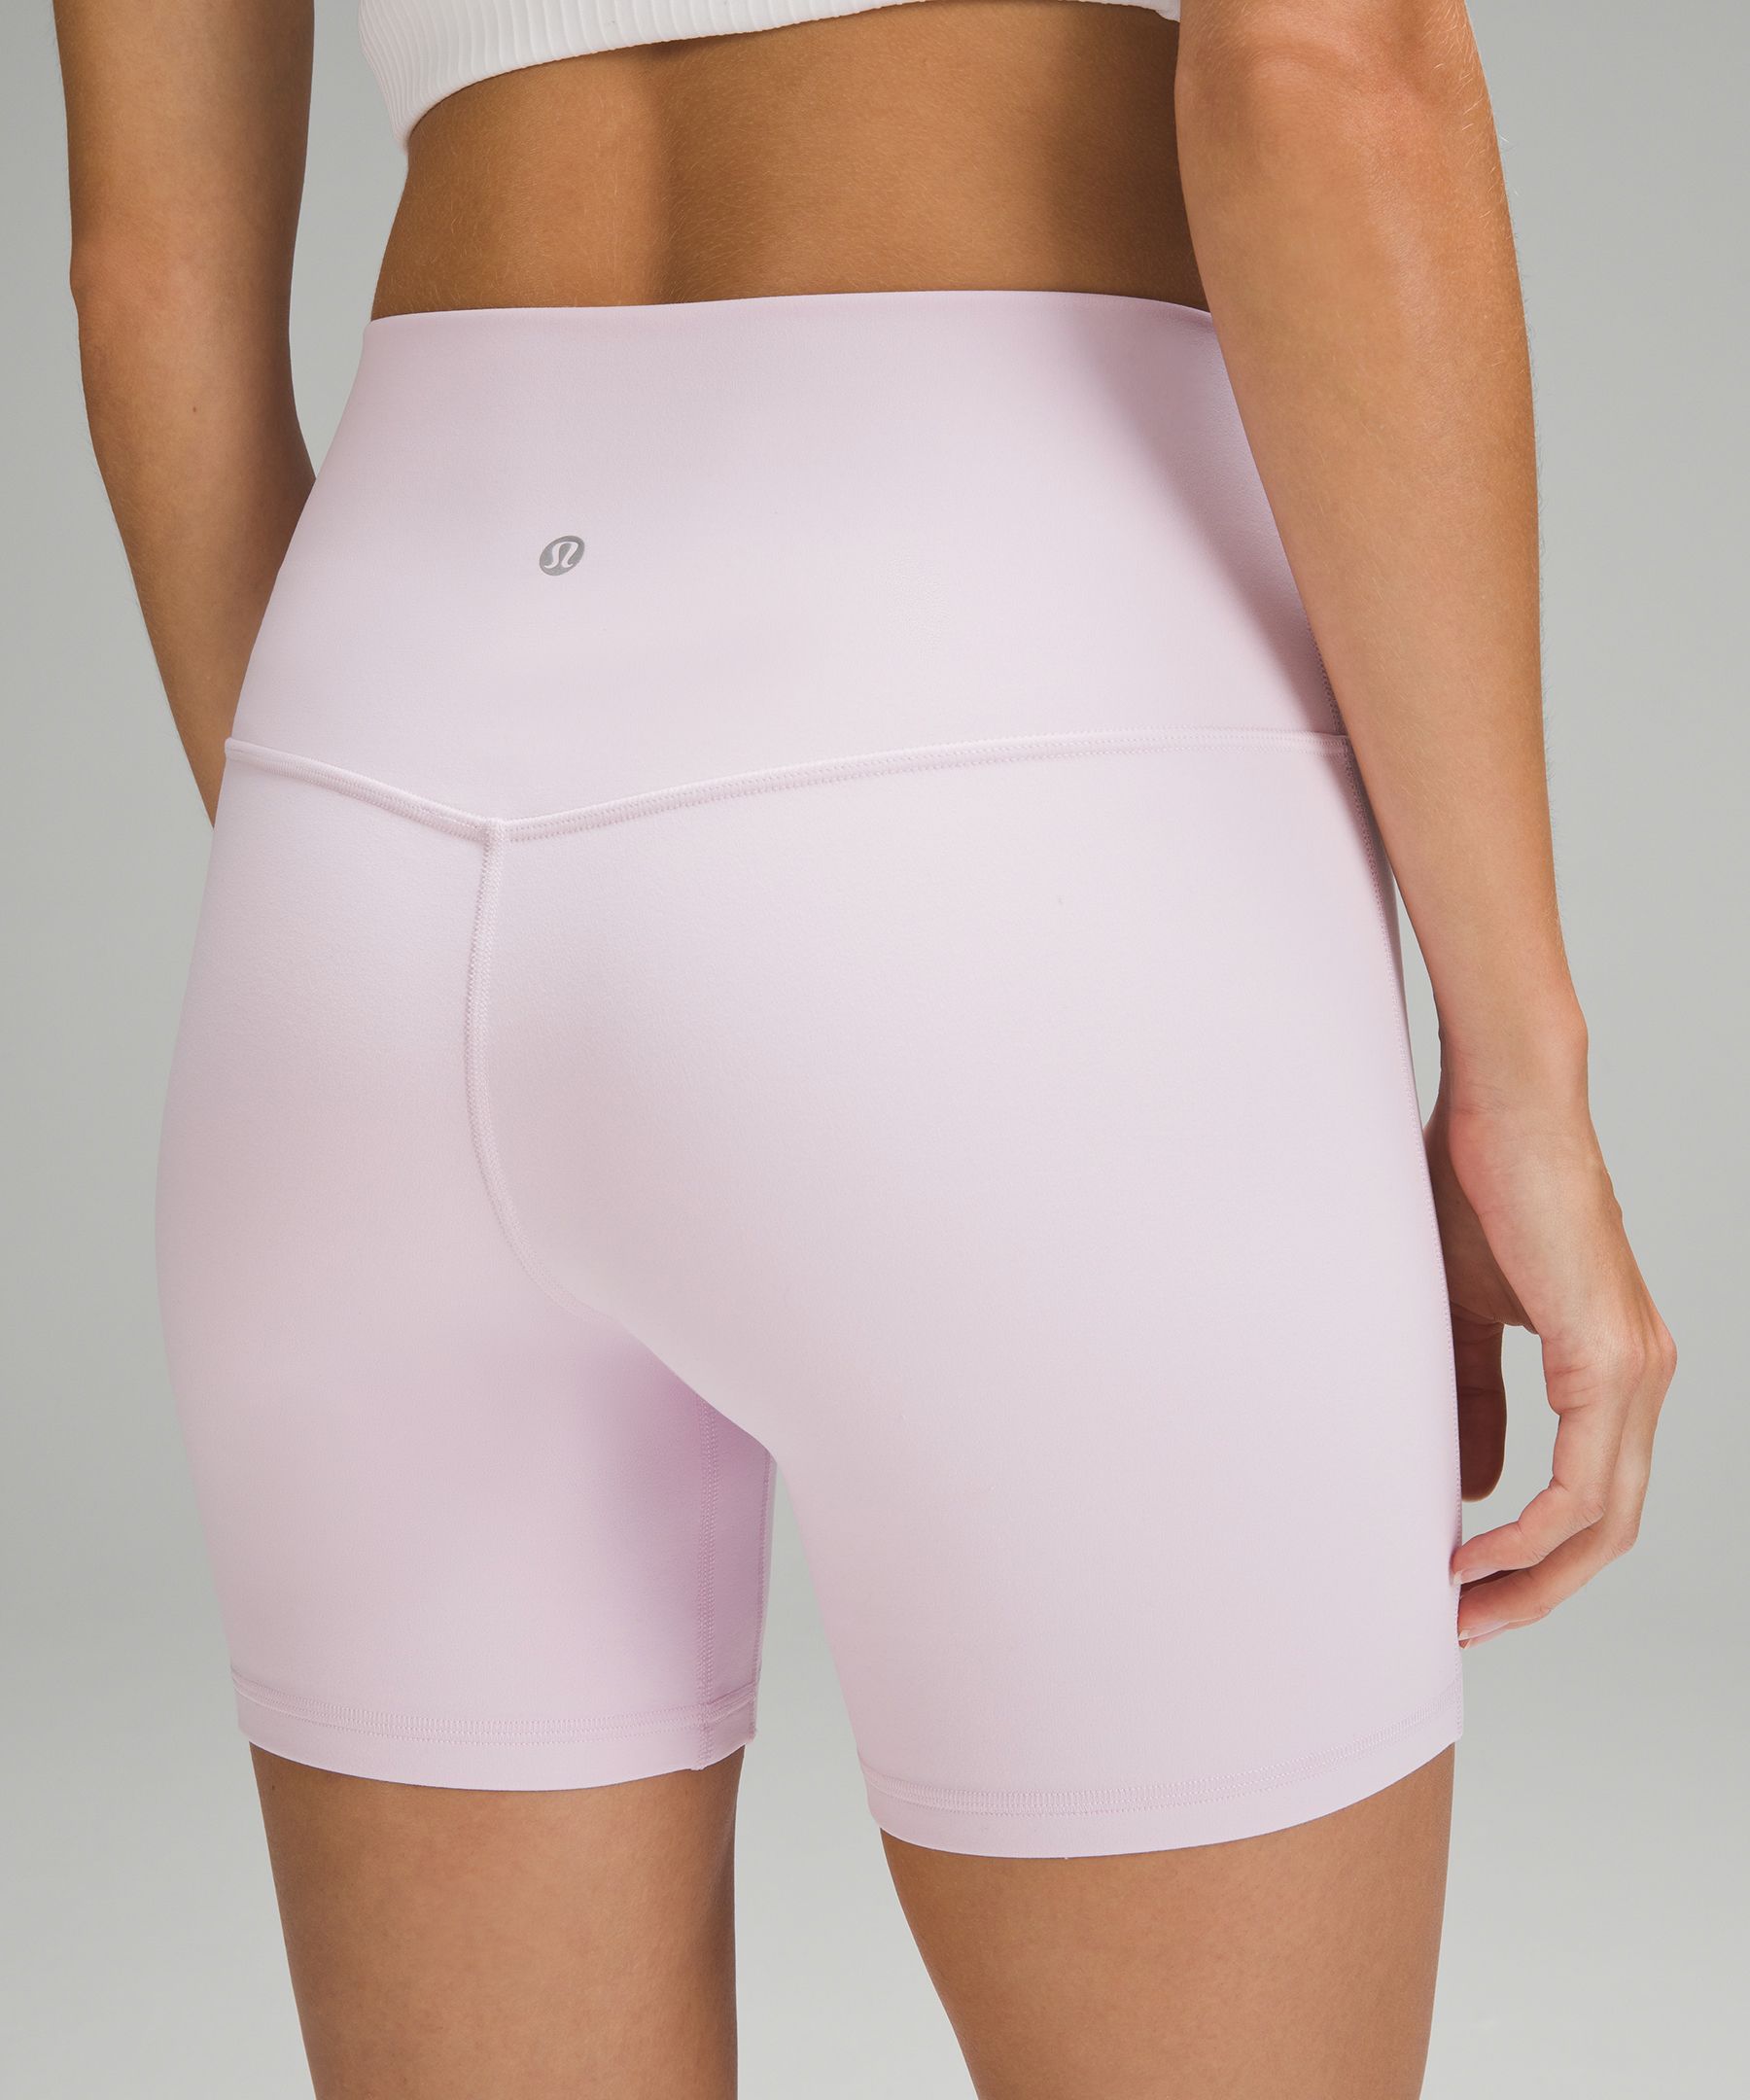 Lululemon Align Shorts 6” Pink Size 10 - $67 - From Cayla